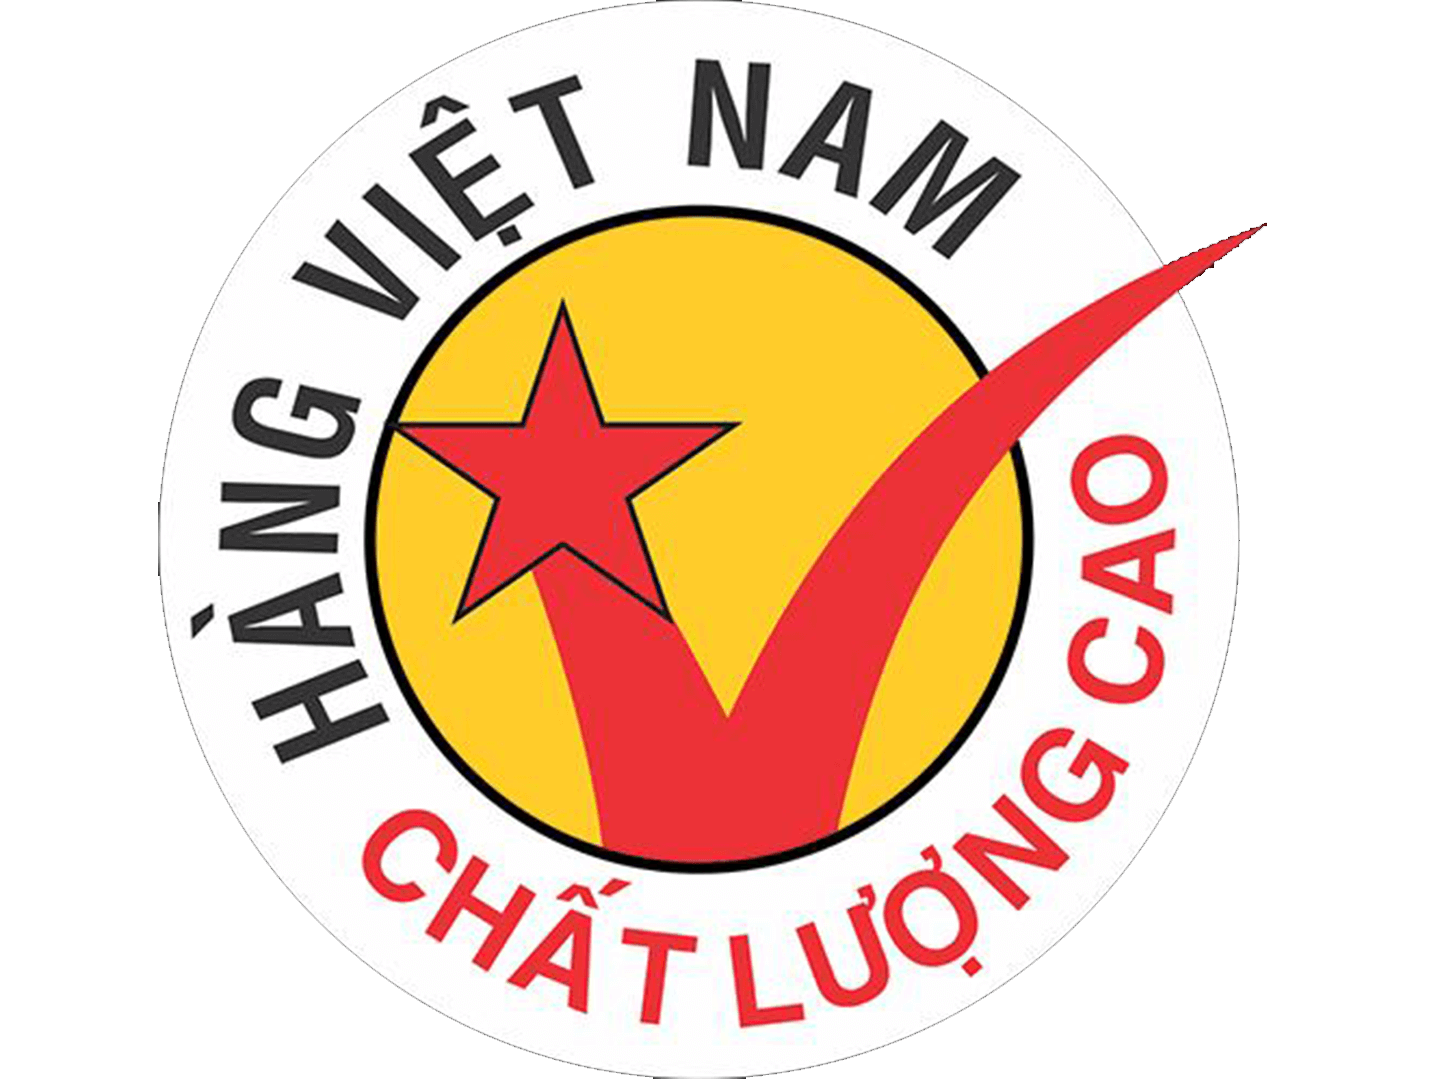 High Quality Vietnamese Goods 2016